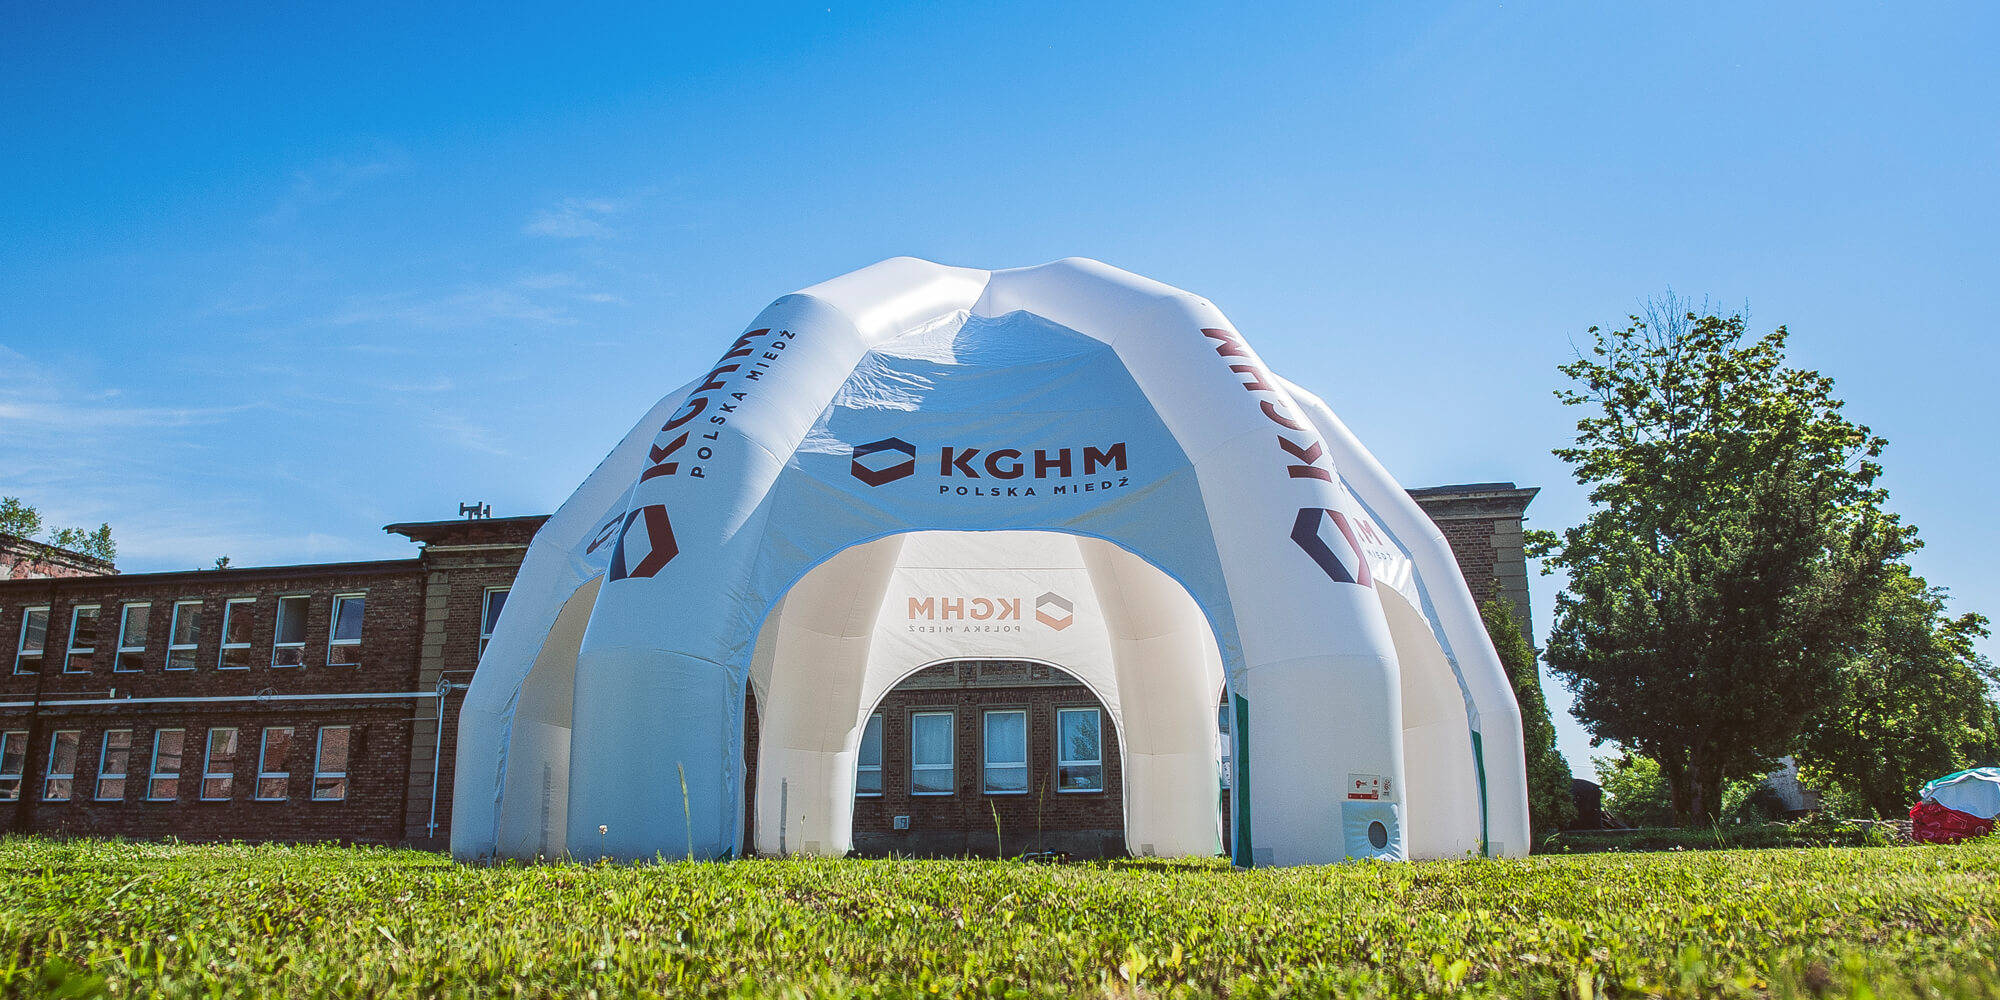 Namiot reklamowy z logotypami KGHM